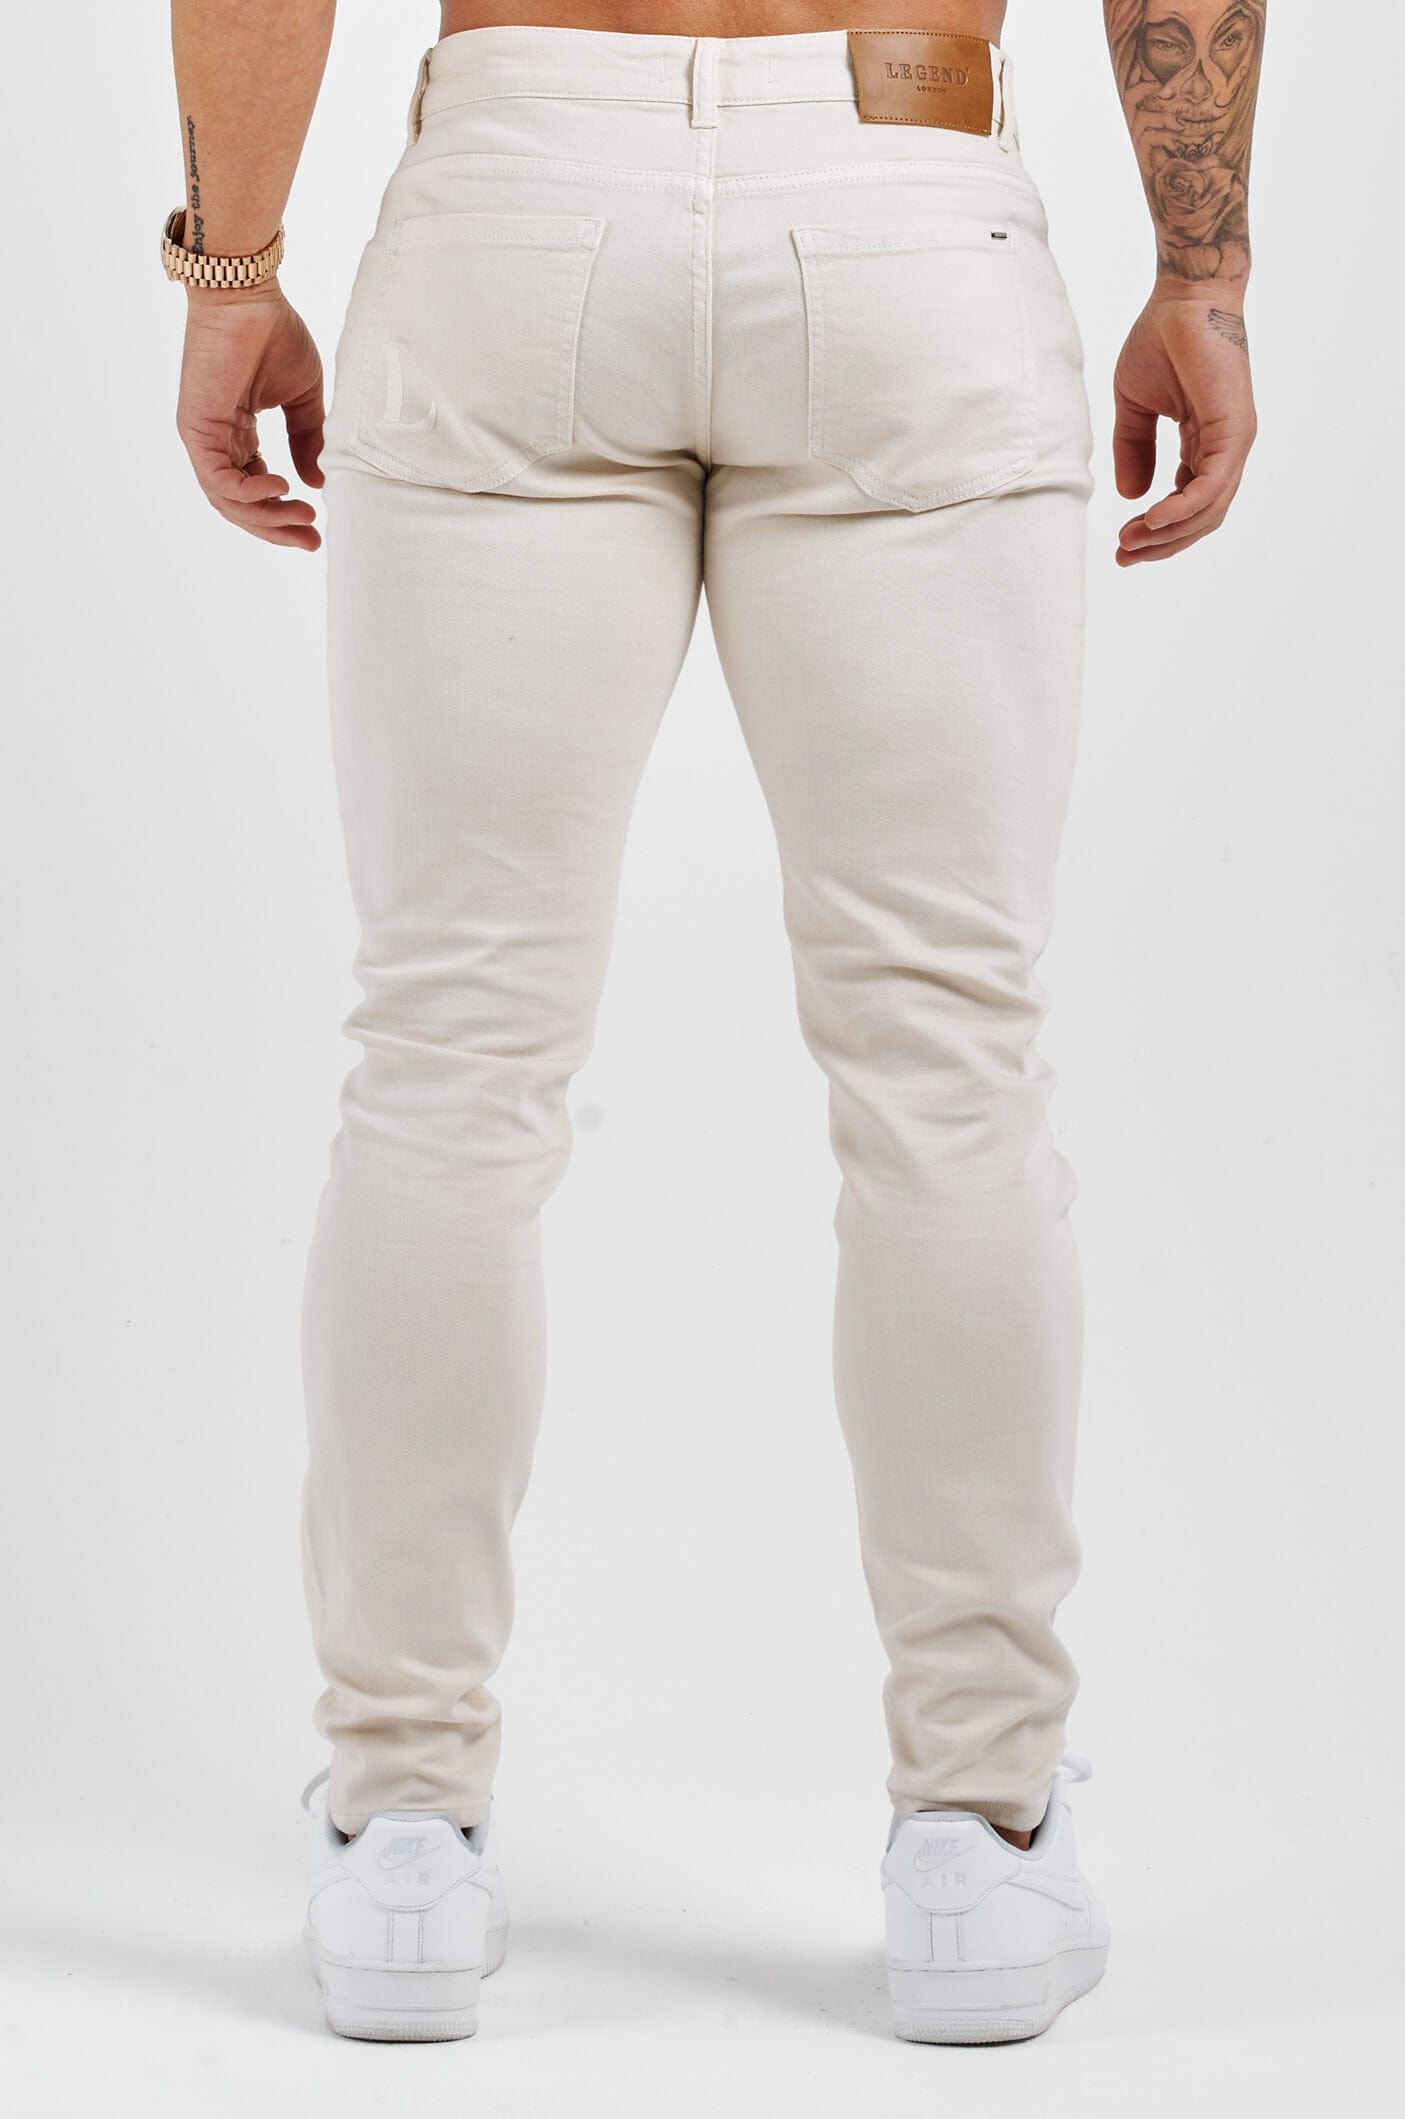 Legend London Jeans - slim 2.0 SLIM FIT JEANS 2.0 - OFF WHITE